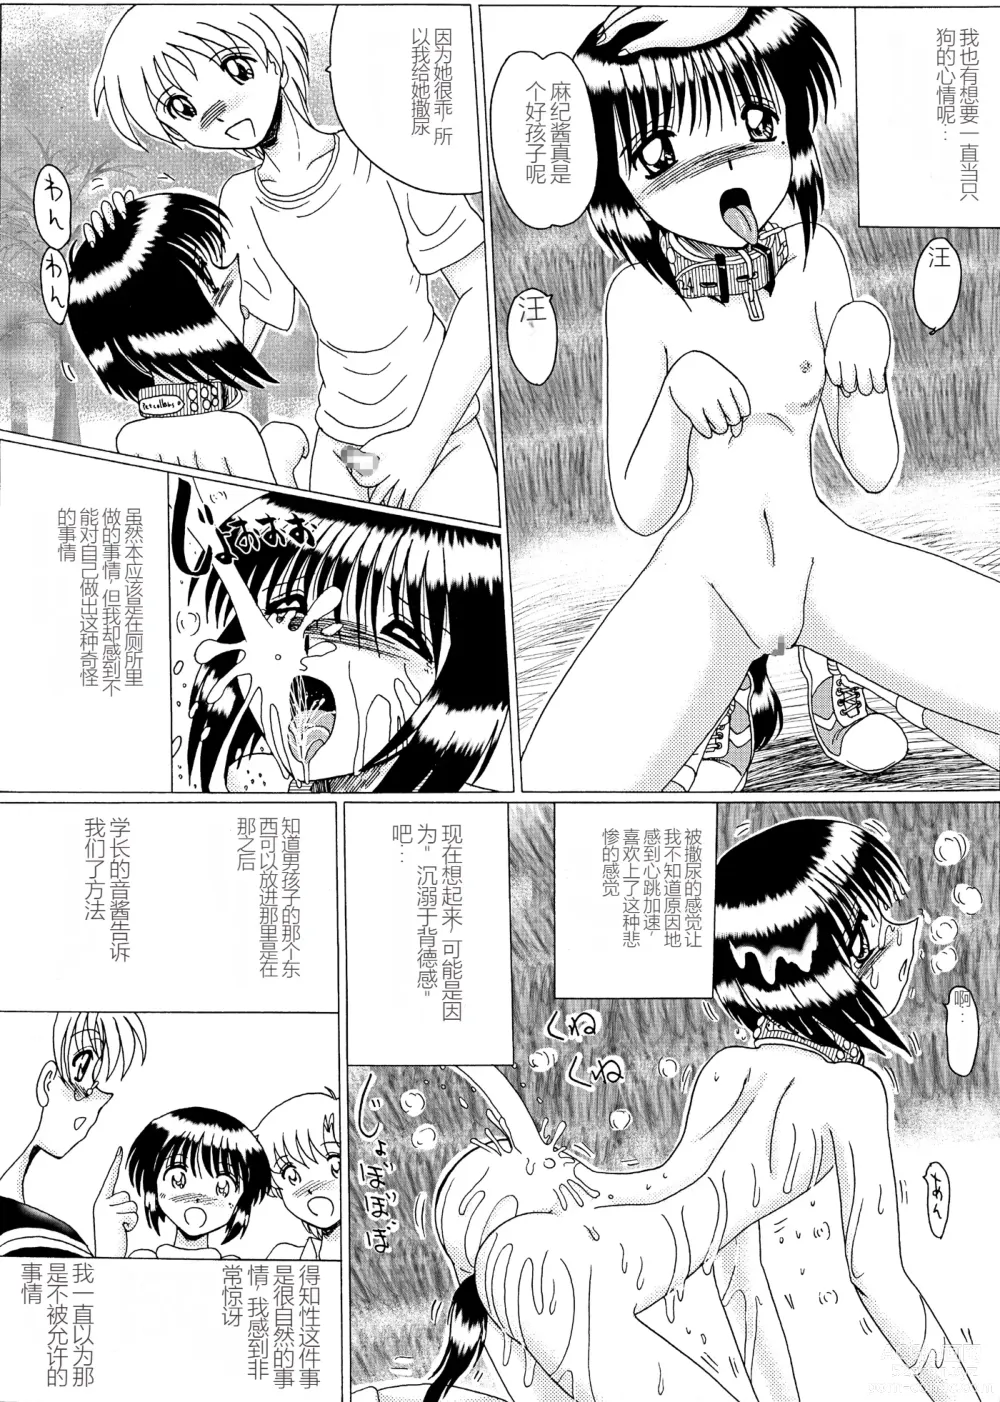 Page 7 of manga Mazo Dorei Maki -Maki to Mazo Doreitachi-